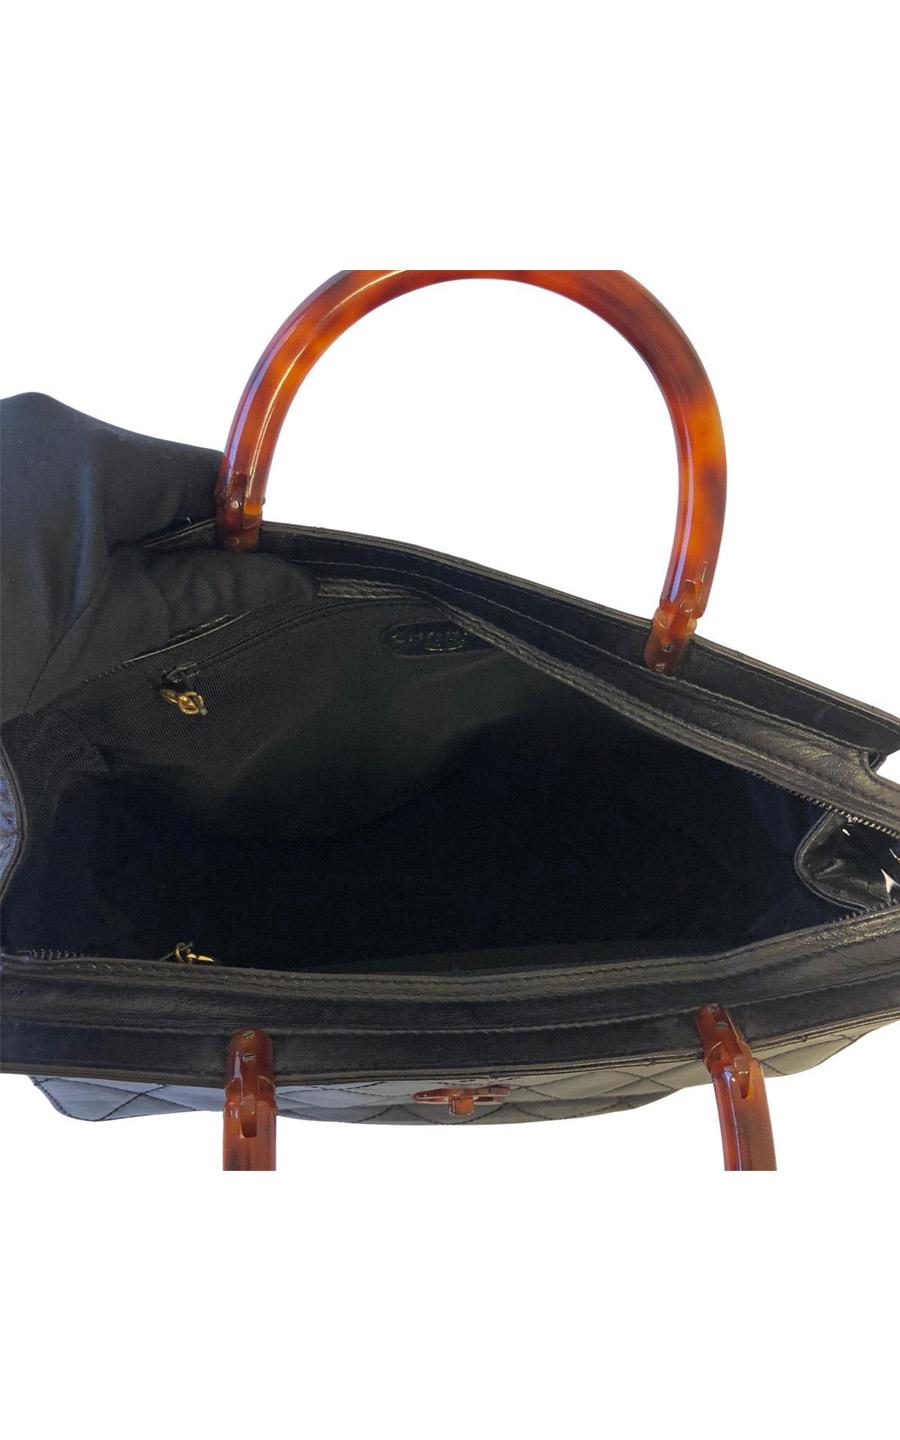 Vintage Chanel Handbag with brown colored hardware - Large  For Sale 2